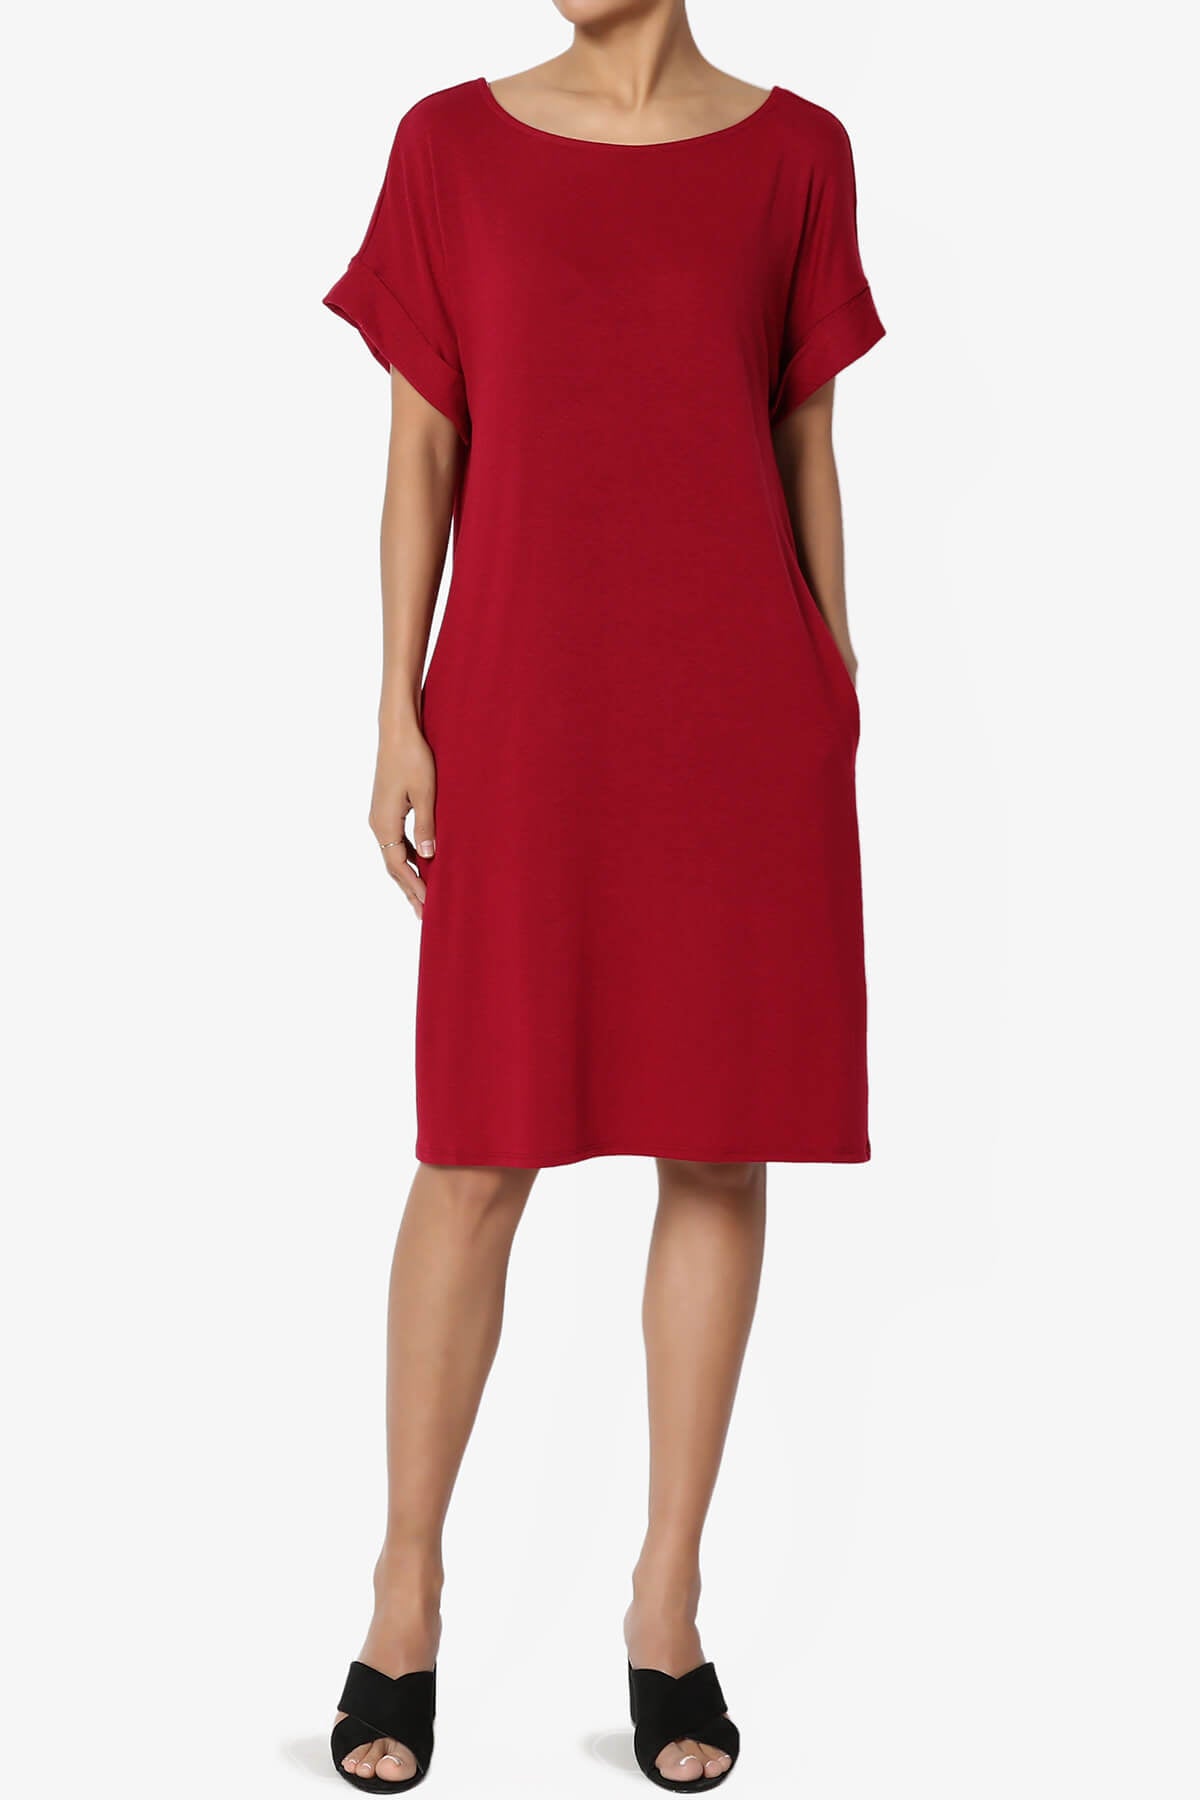 Load image into Gallery viewer, Janie Rolled Short Sleeve Round Neck Dress DARK RED_1
